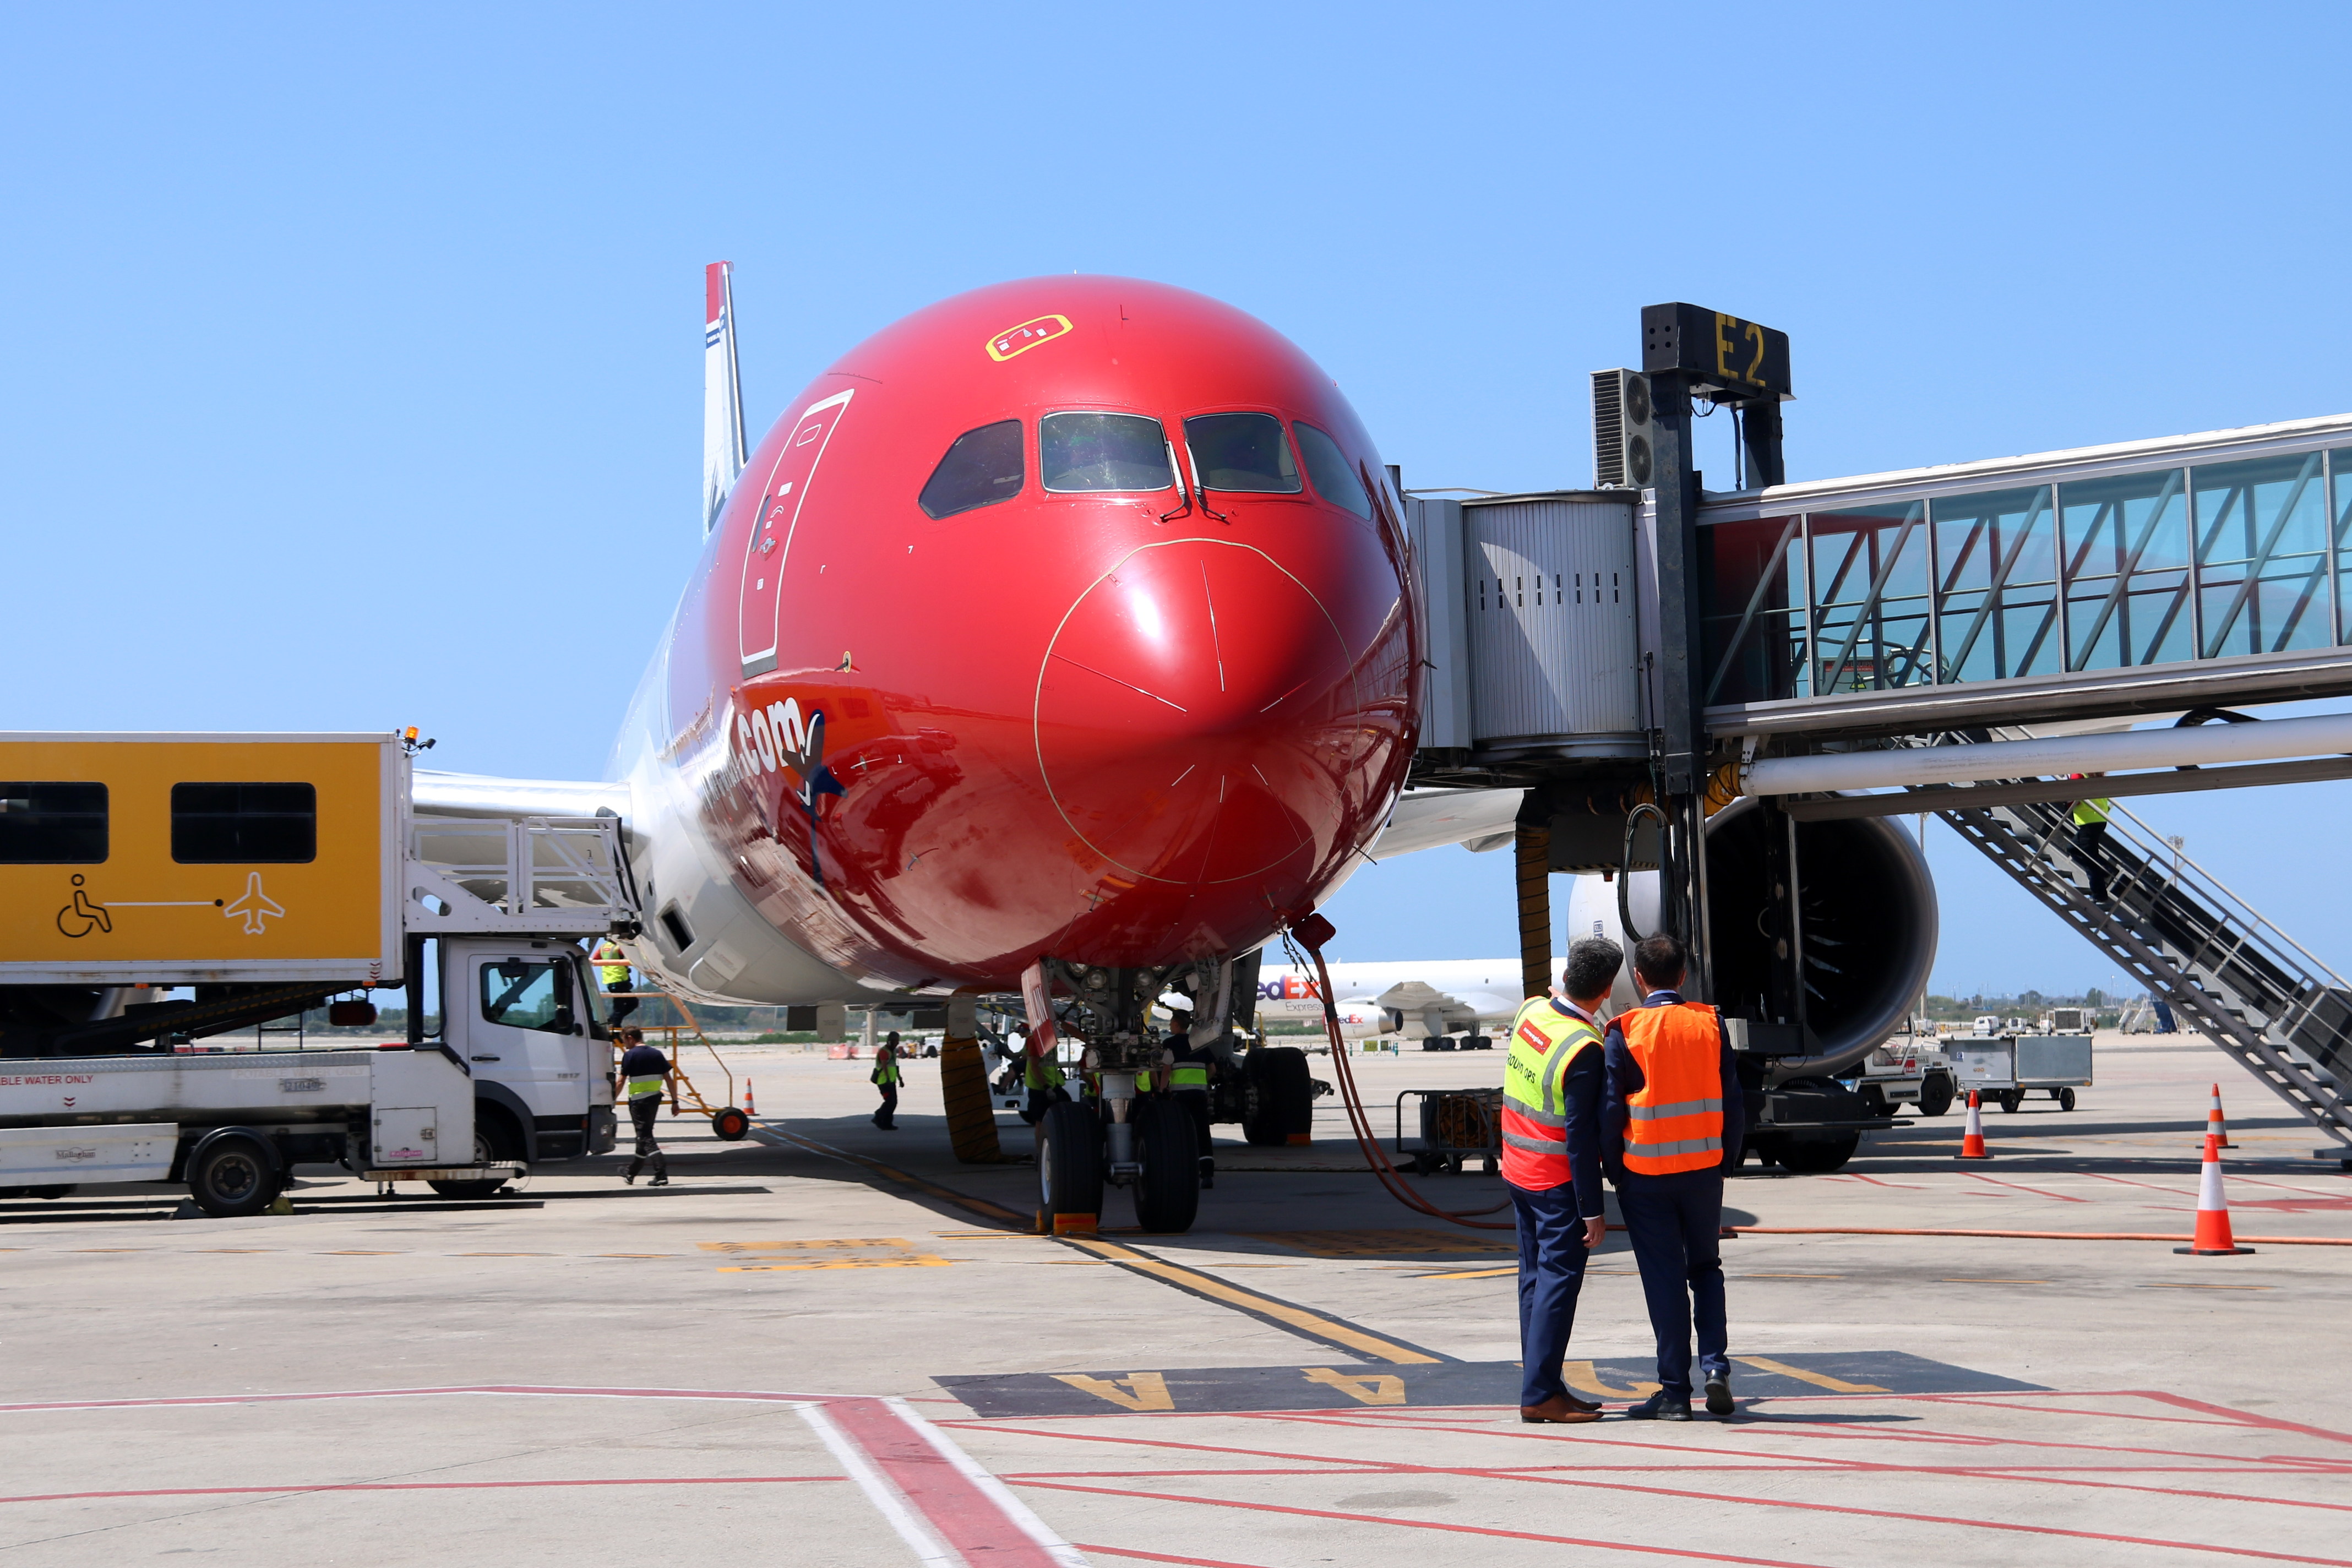 Norwegian Airline's plane sits on the runway at El Prat airport on June 7, 2019 (Aina Martí/ACN)